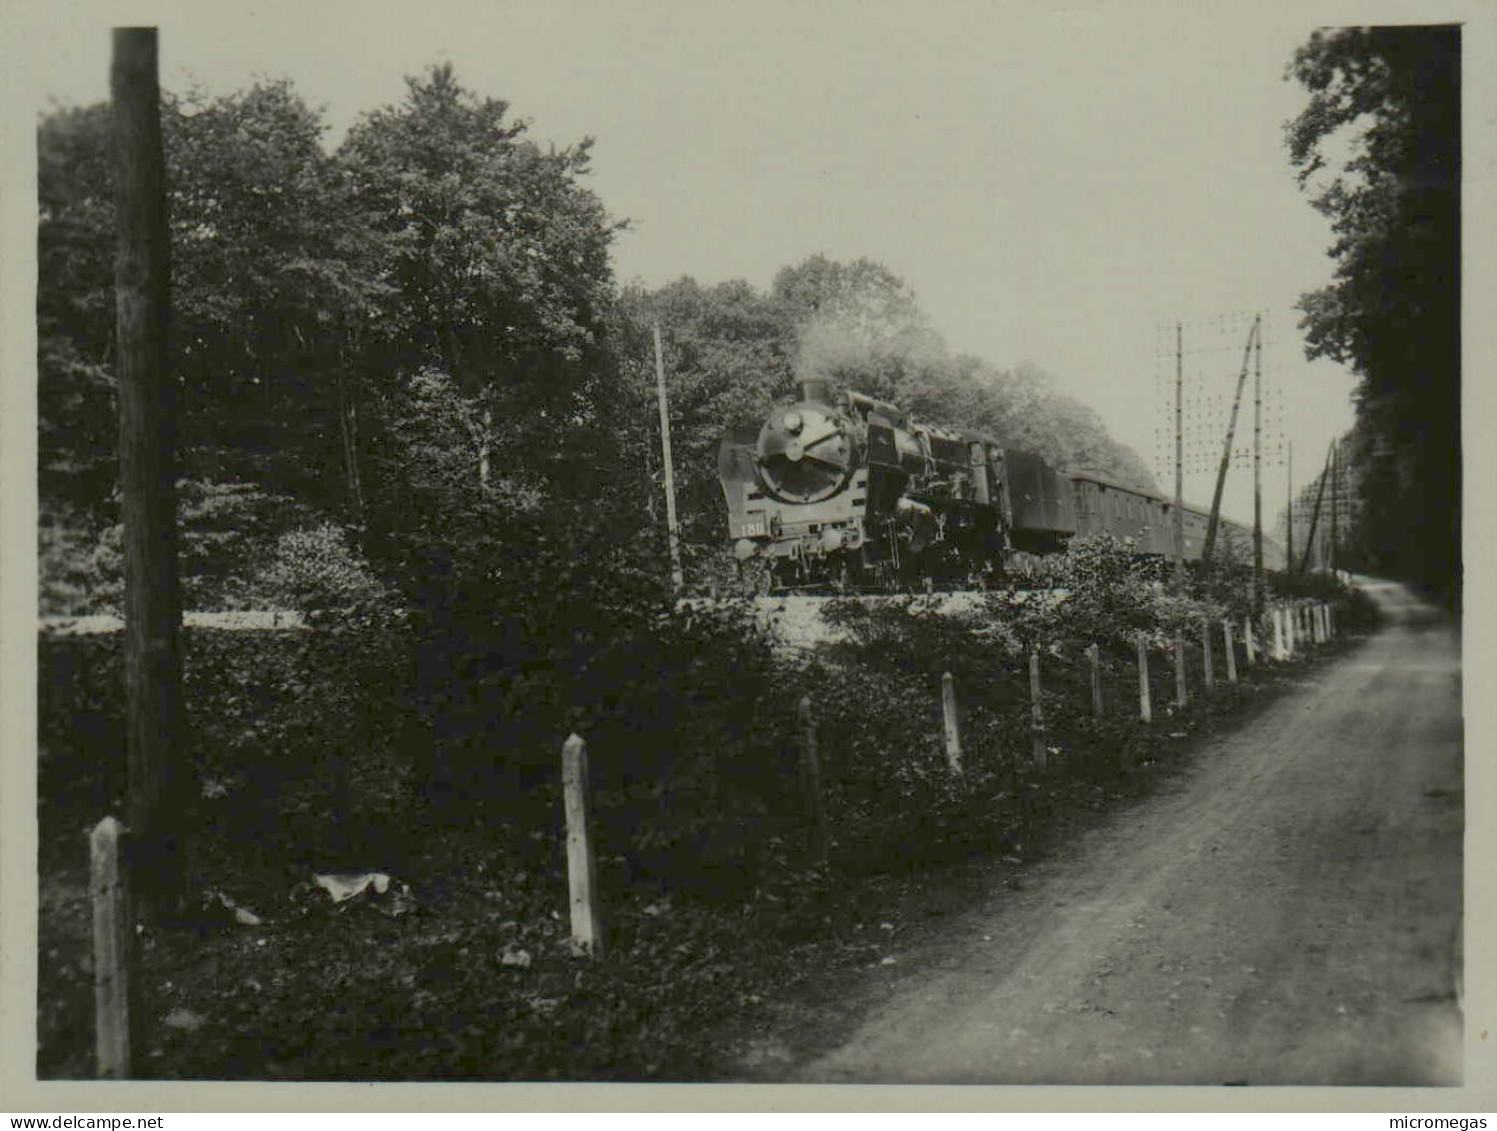 1934 - Rapide 180 Nord-Express - Machine 3-1289, Vers Km.36 - Photo 12 X 9 Cm. - Trains